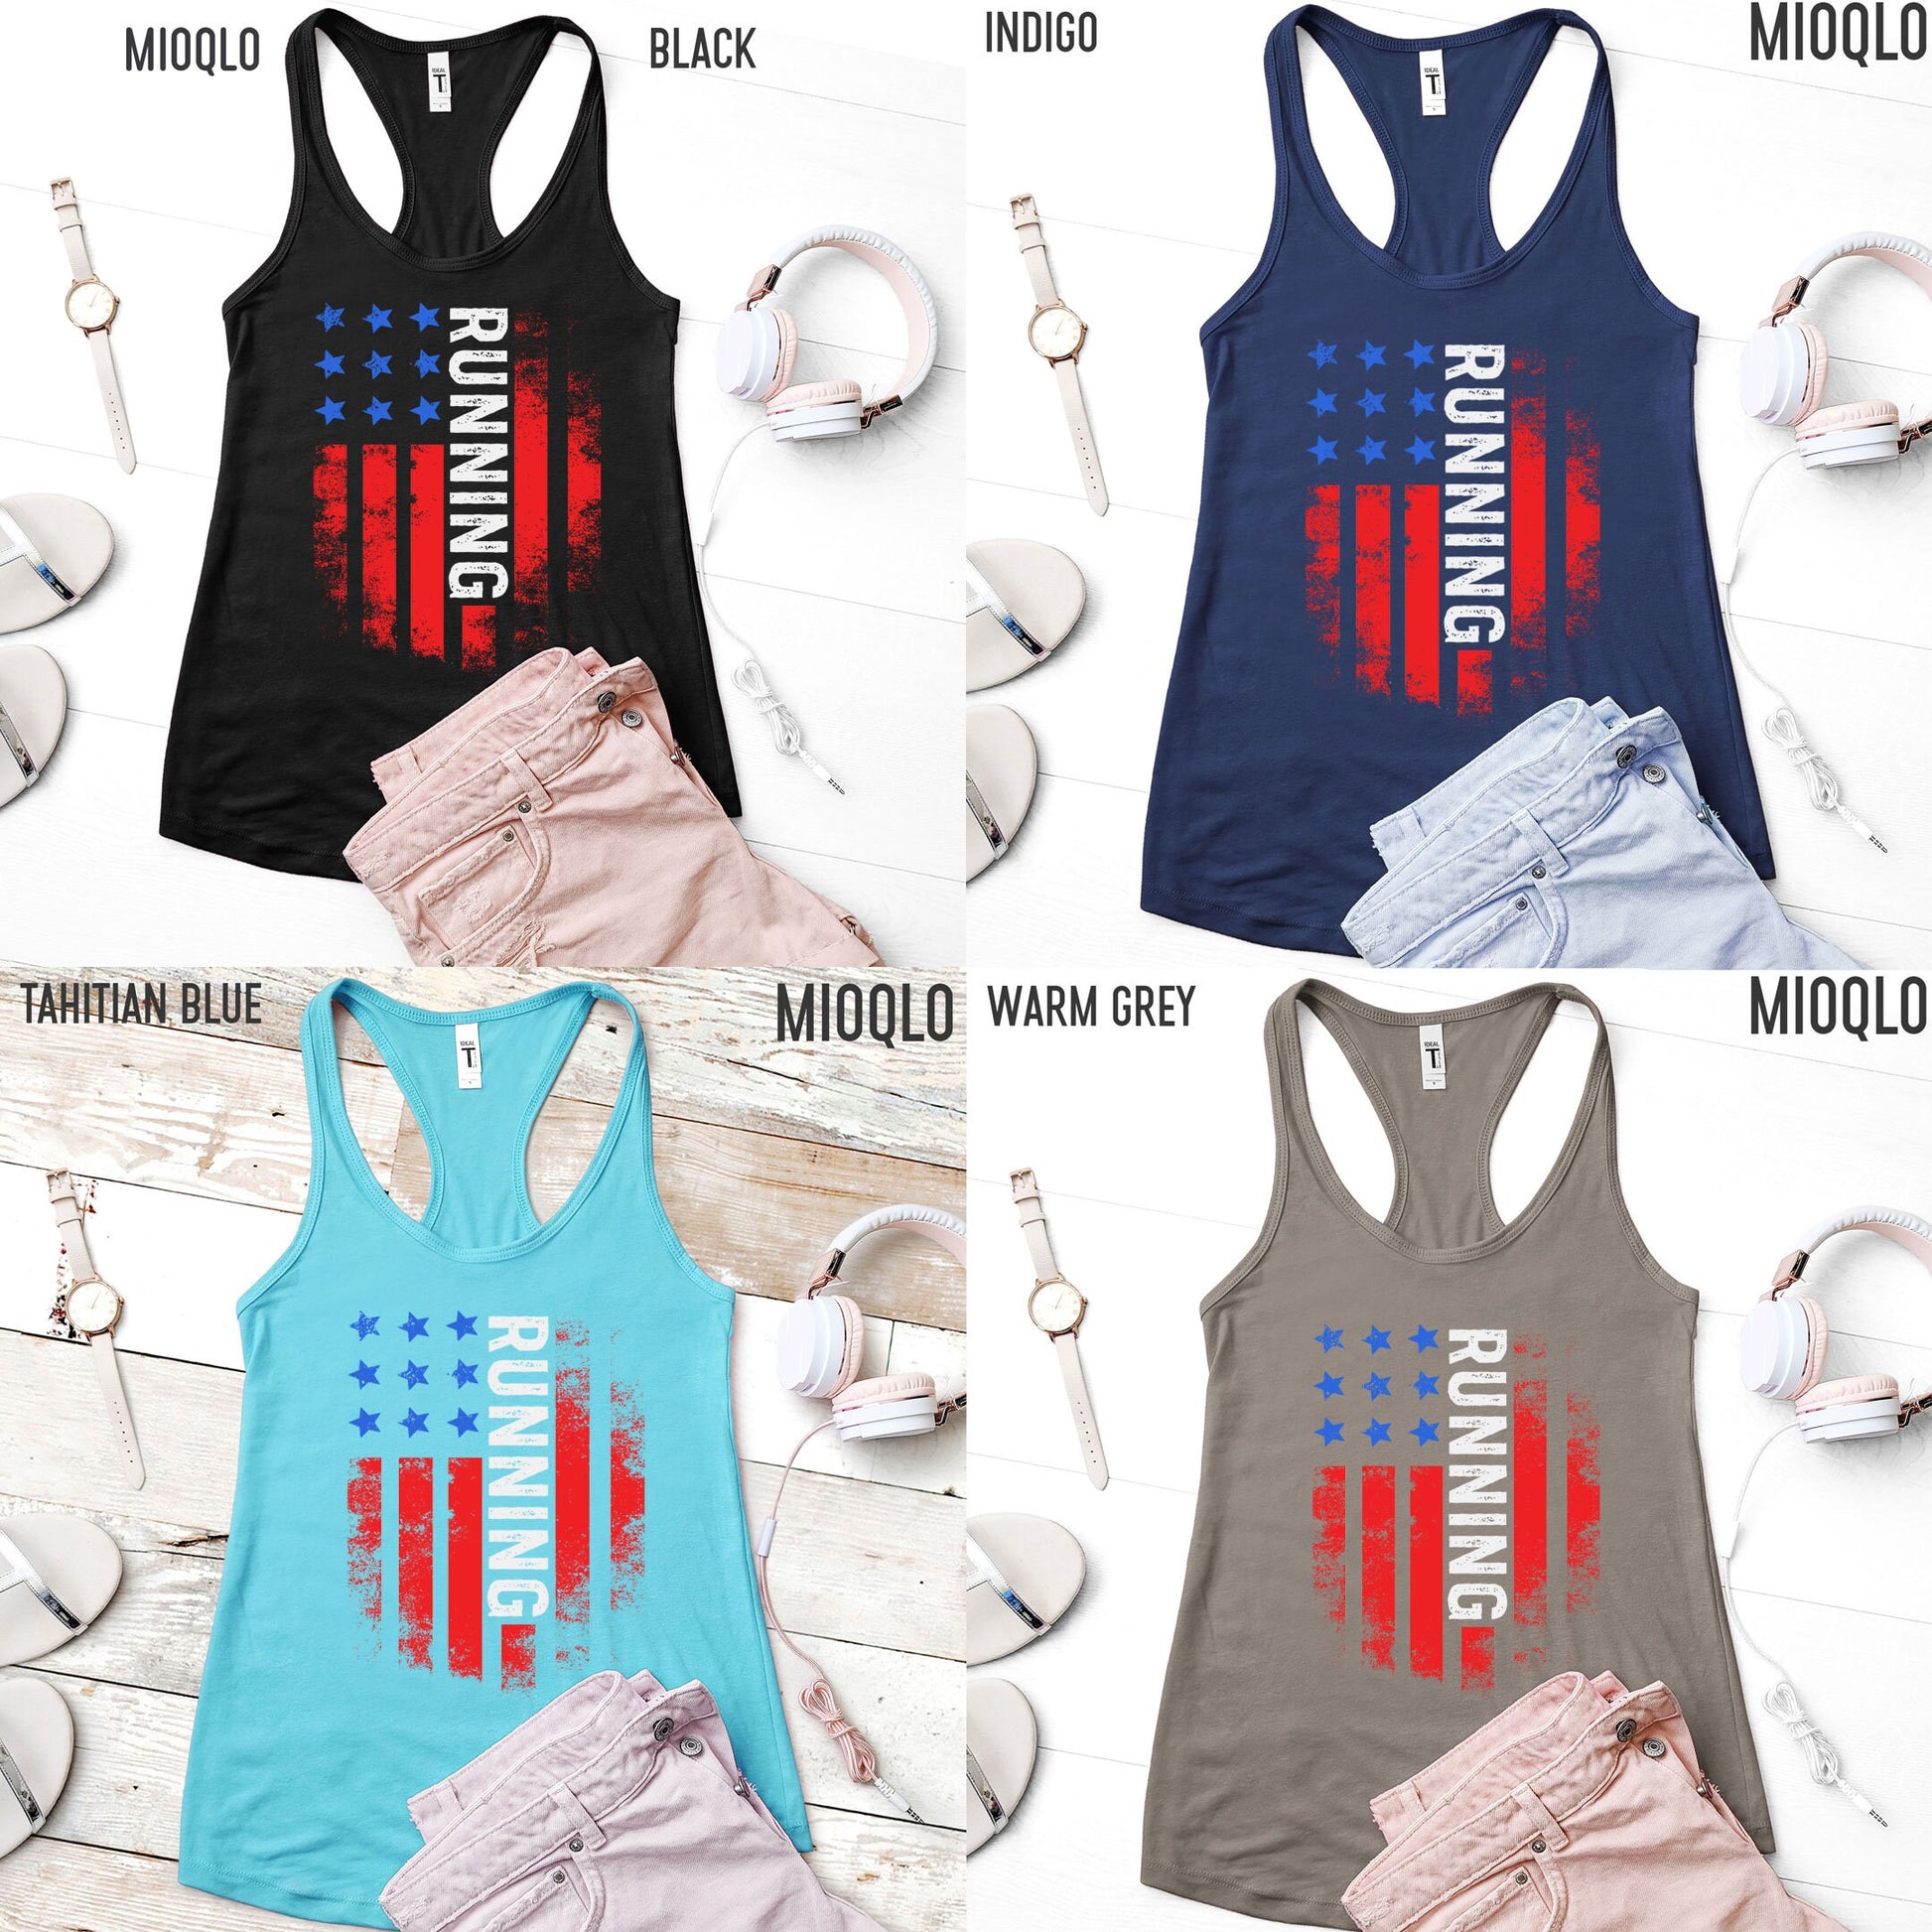 Running Team USA Shirt, America Shirt, American Flag 2021, Unisex Comfy Tee, Vintage USA, Retro USA, Runner Run Milestone Marathon Tank Top